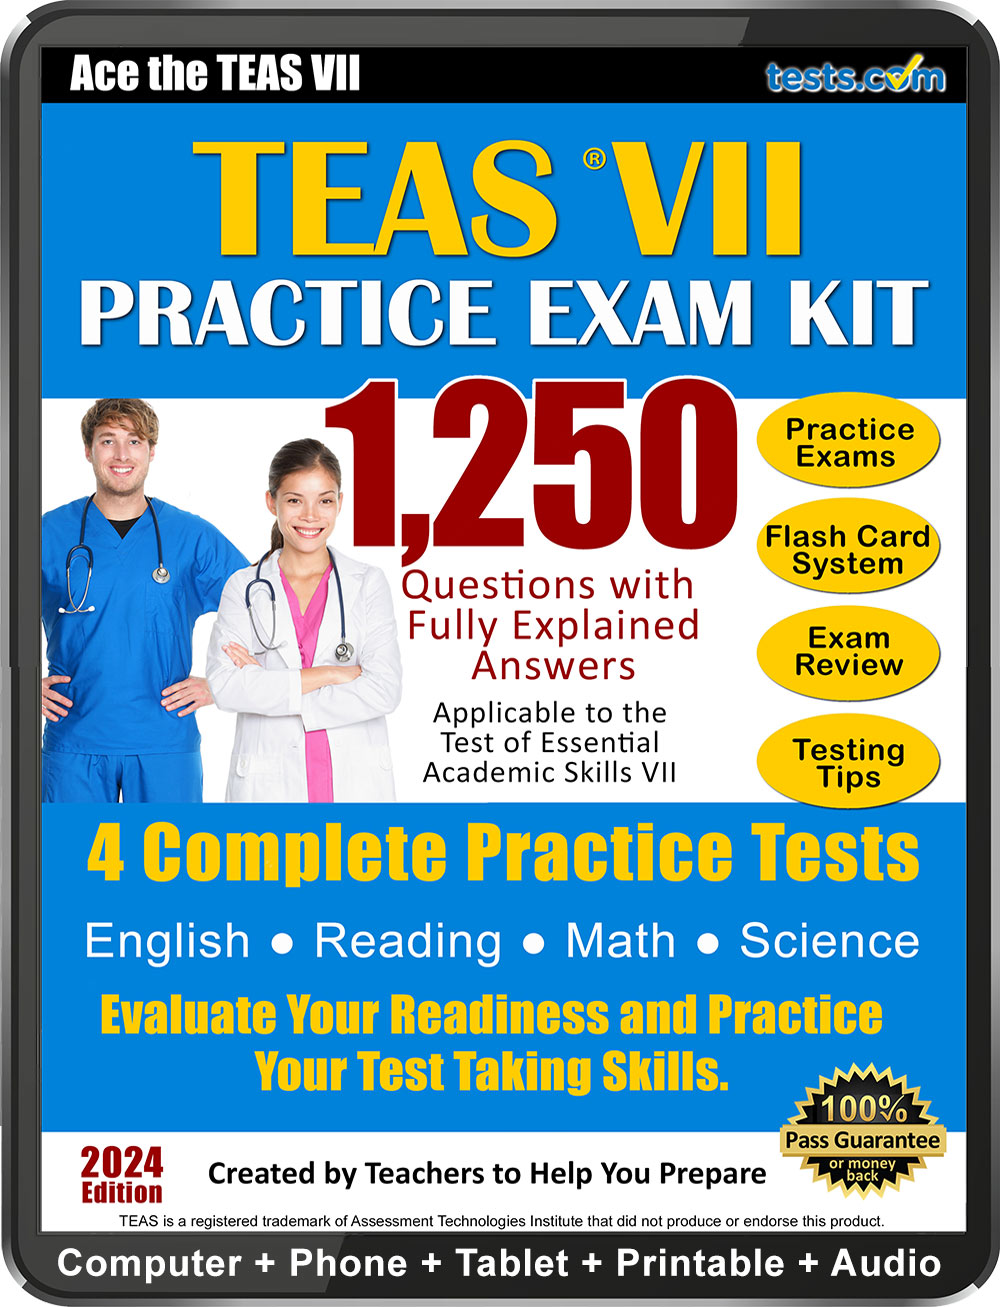 Complete Practice Test for the TEAS V, Nursing School Preparation